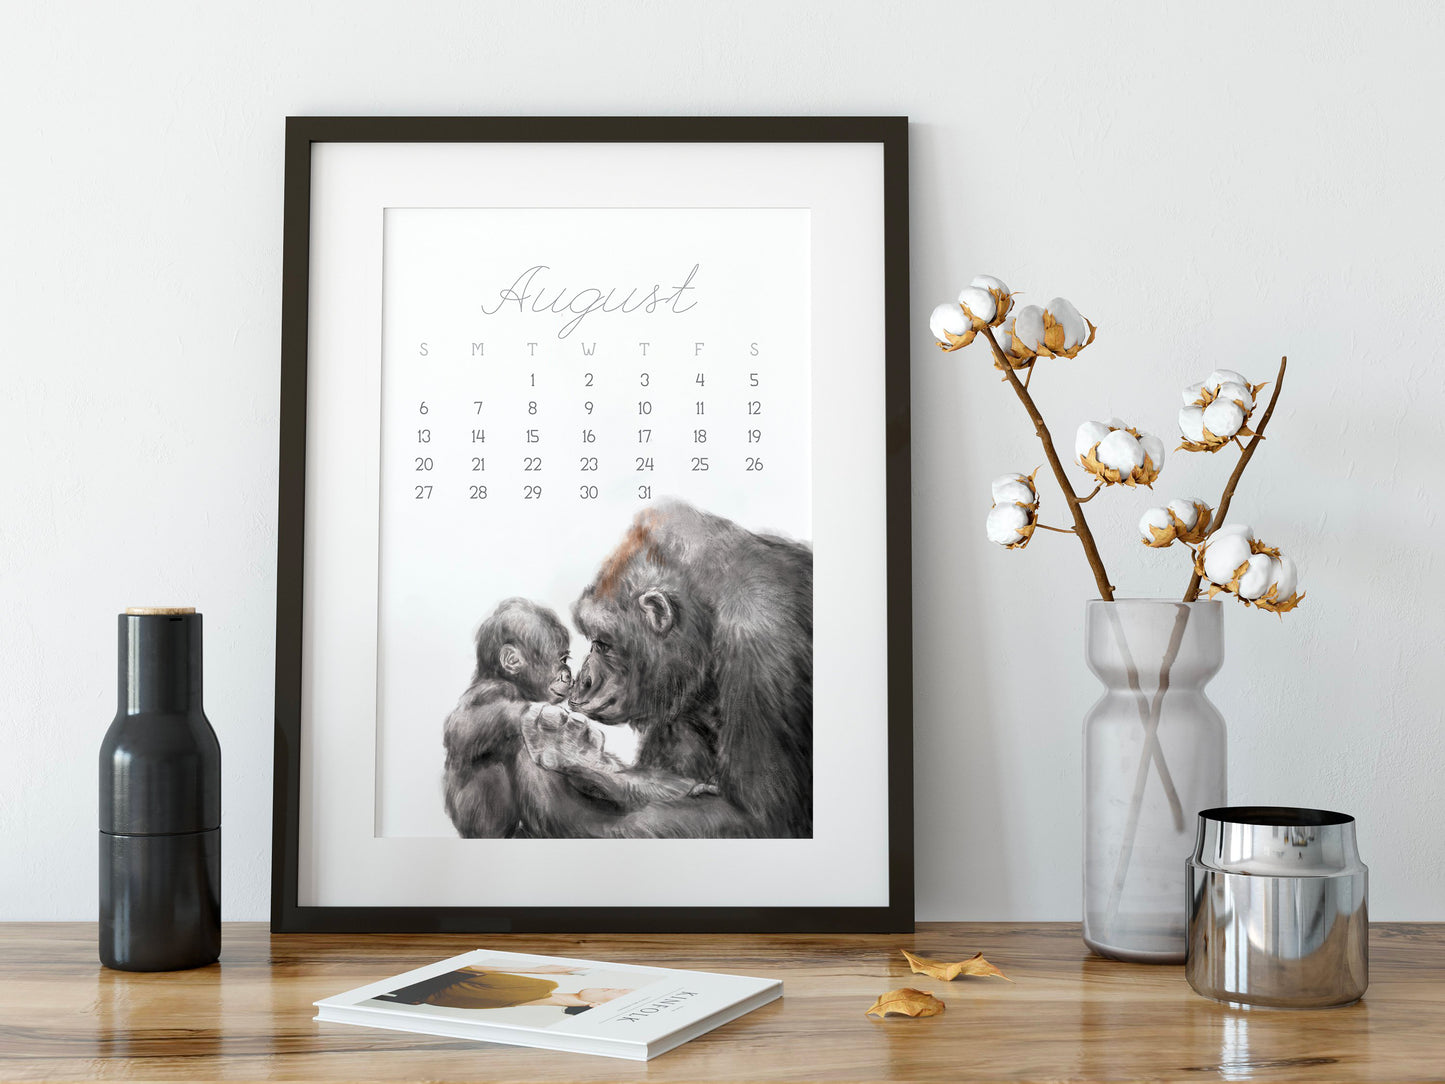 2023 Animal Desk Calendar - Mom and Baby